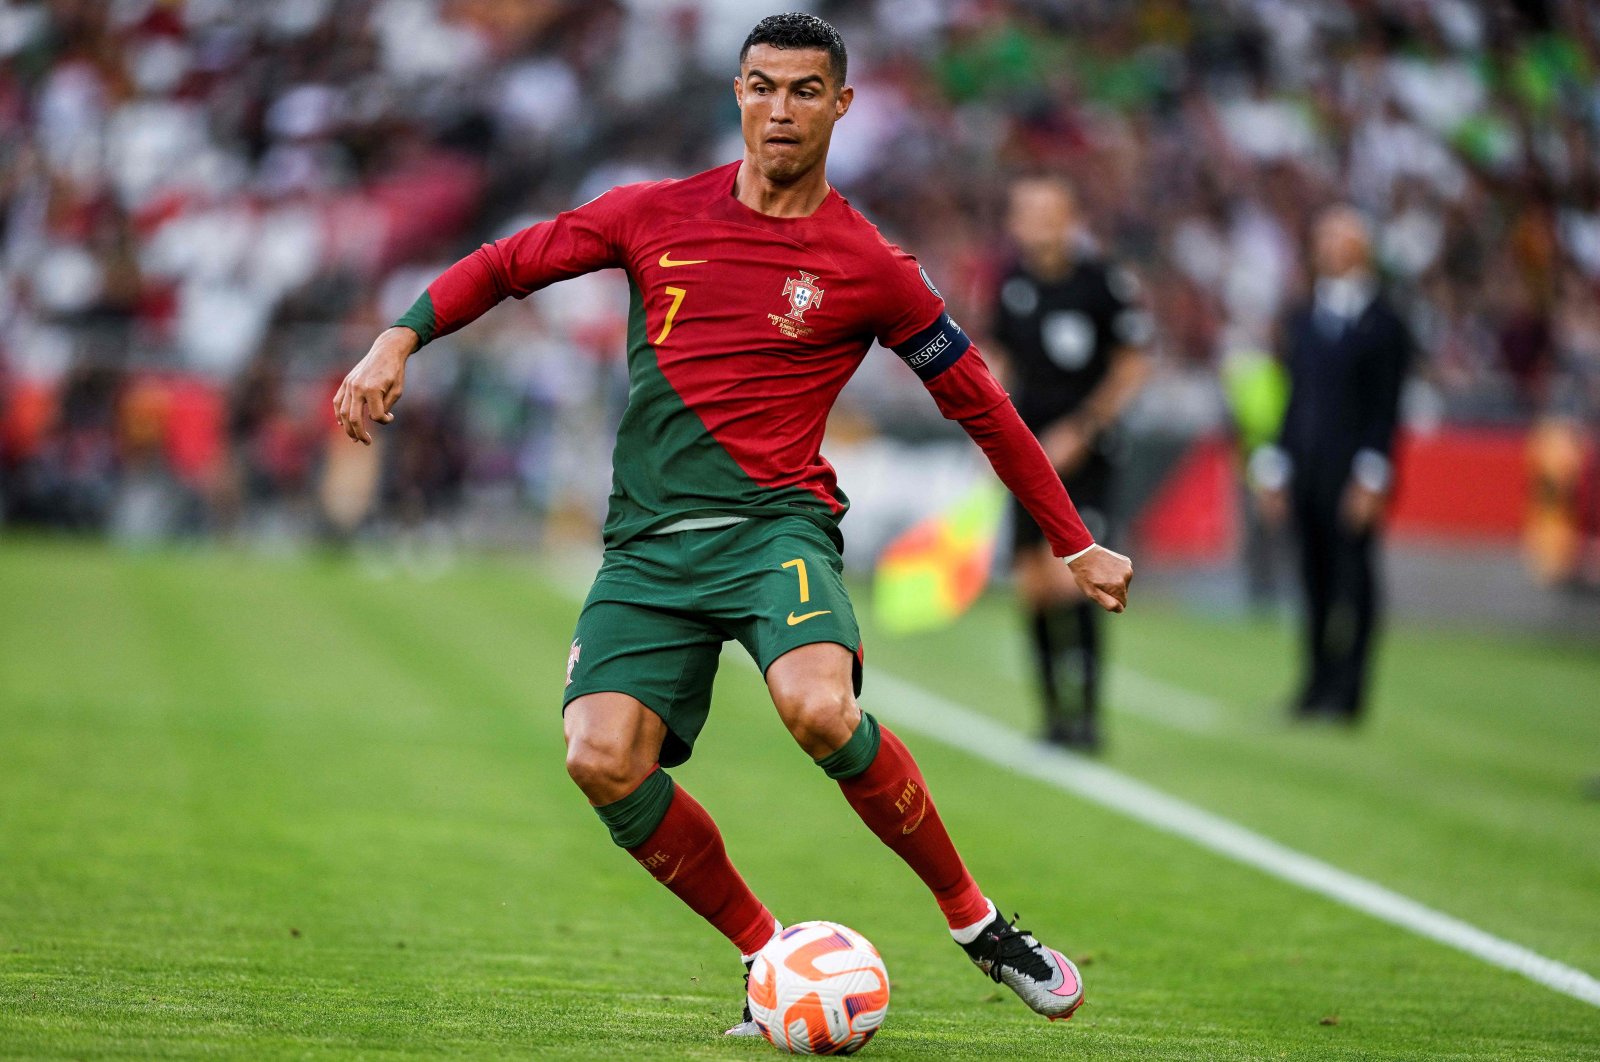 Ronaldo poised to mark monumental 200th Portugal cap milestone